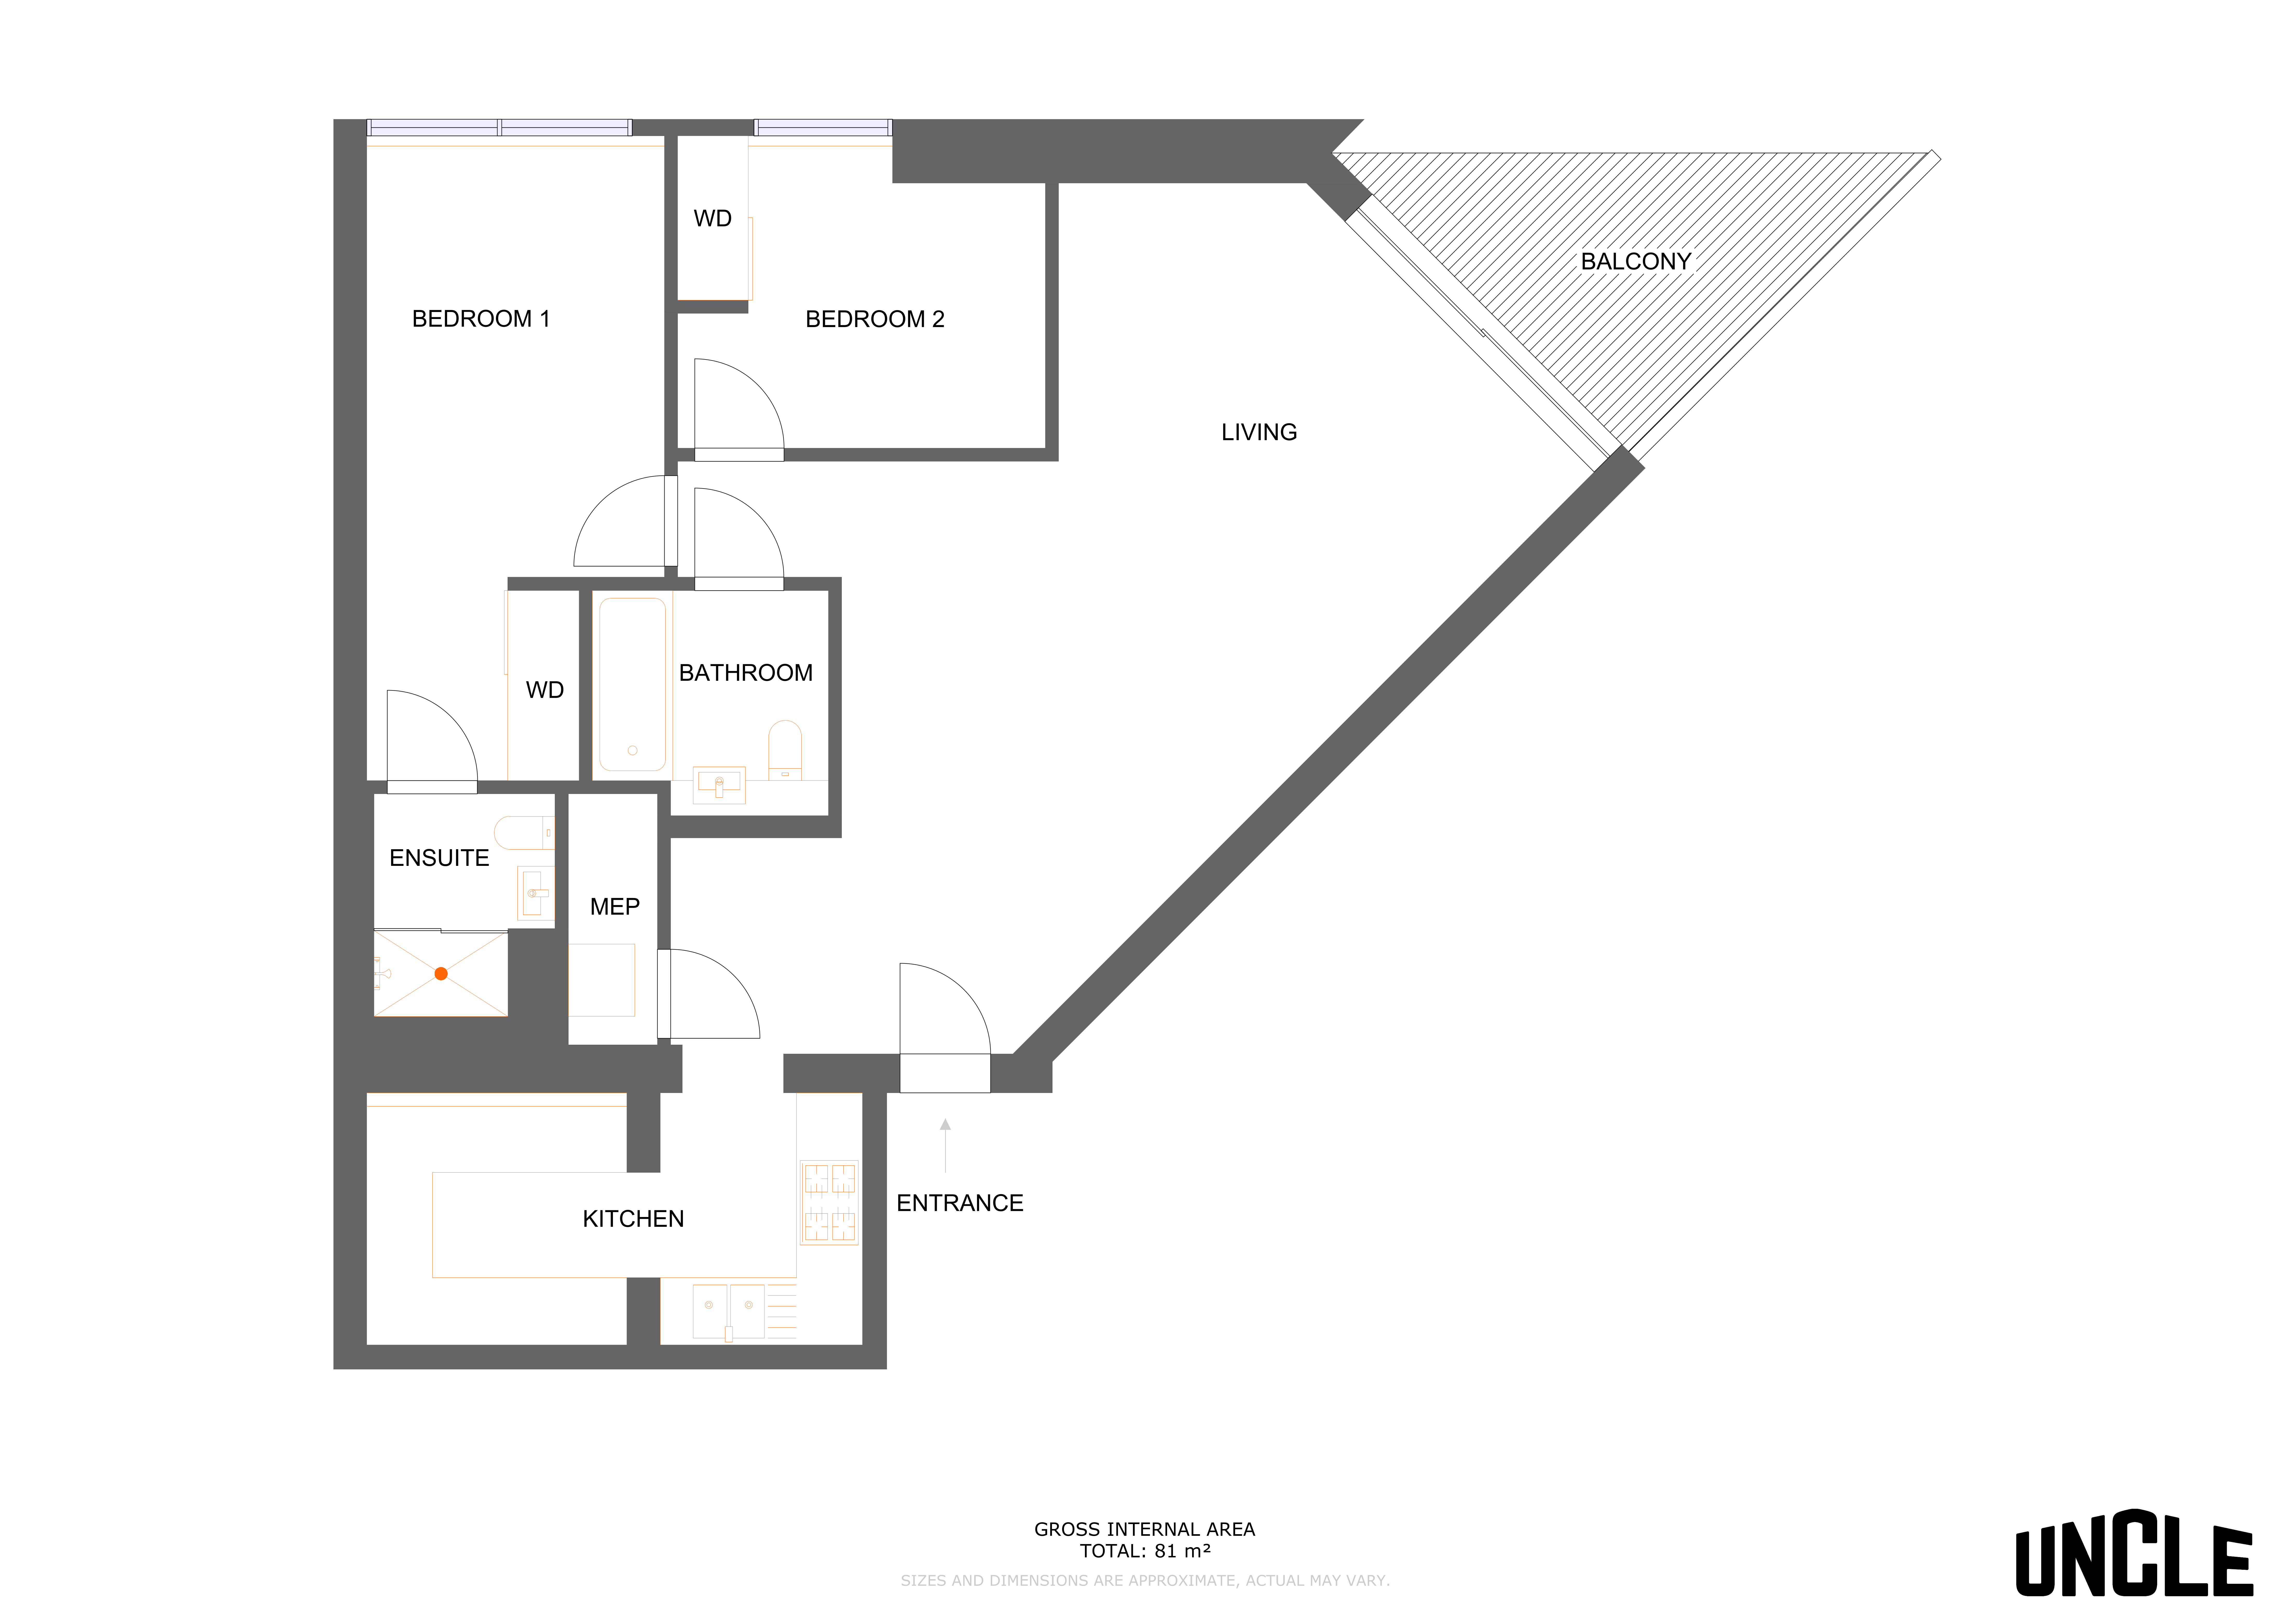 UNCLE Elephant & Castle Two Bedroom Floorplan